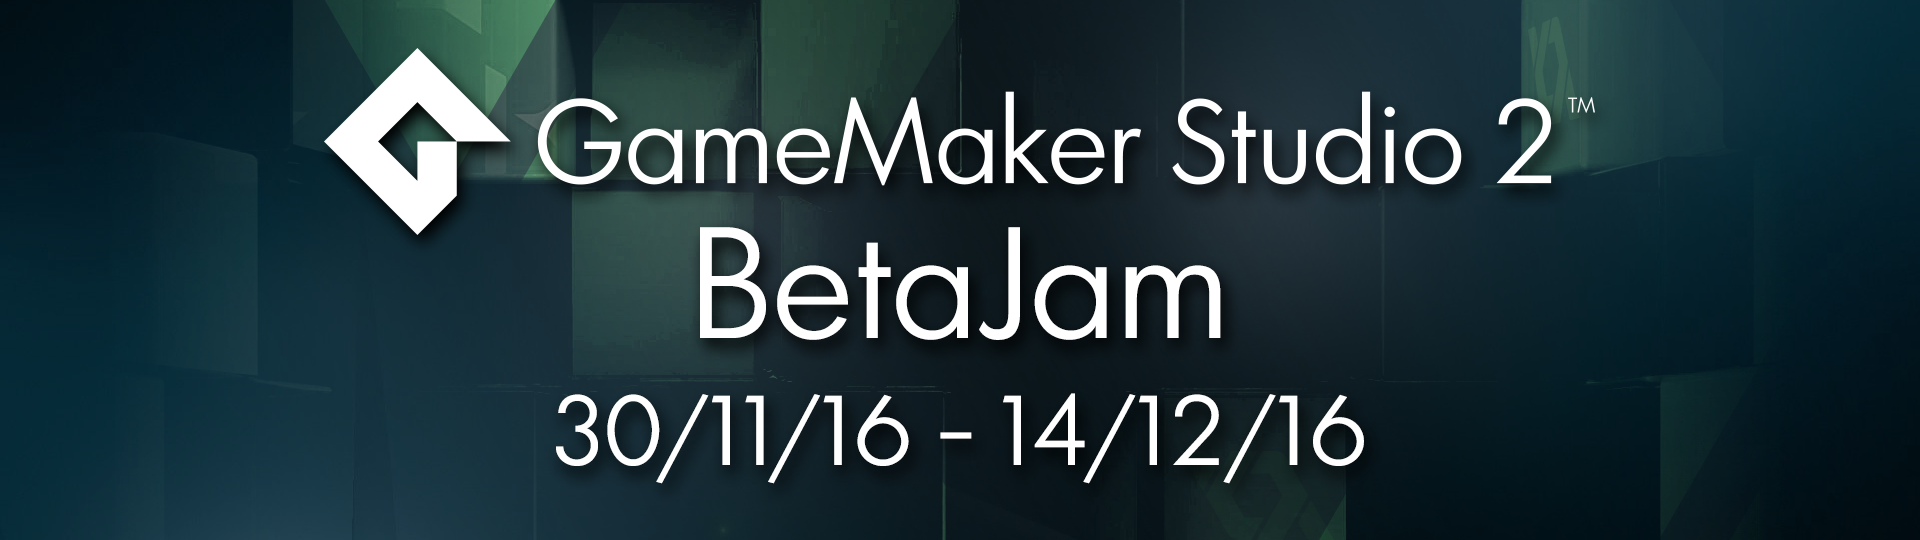 GameMaker Launches Online Multiplayer Beta